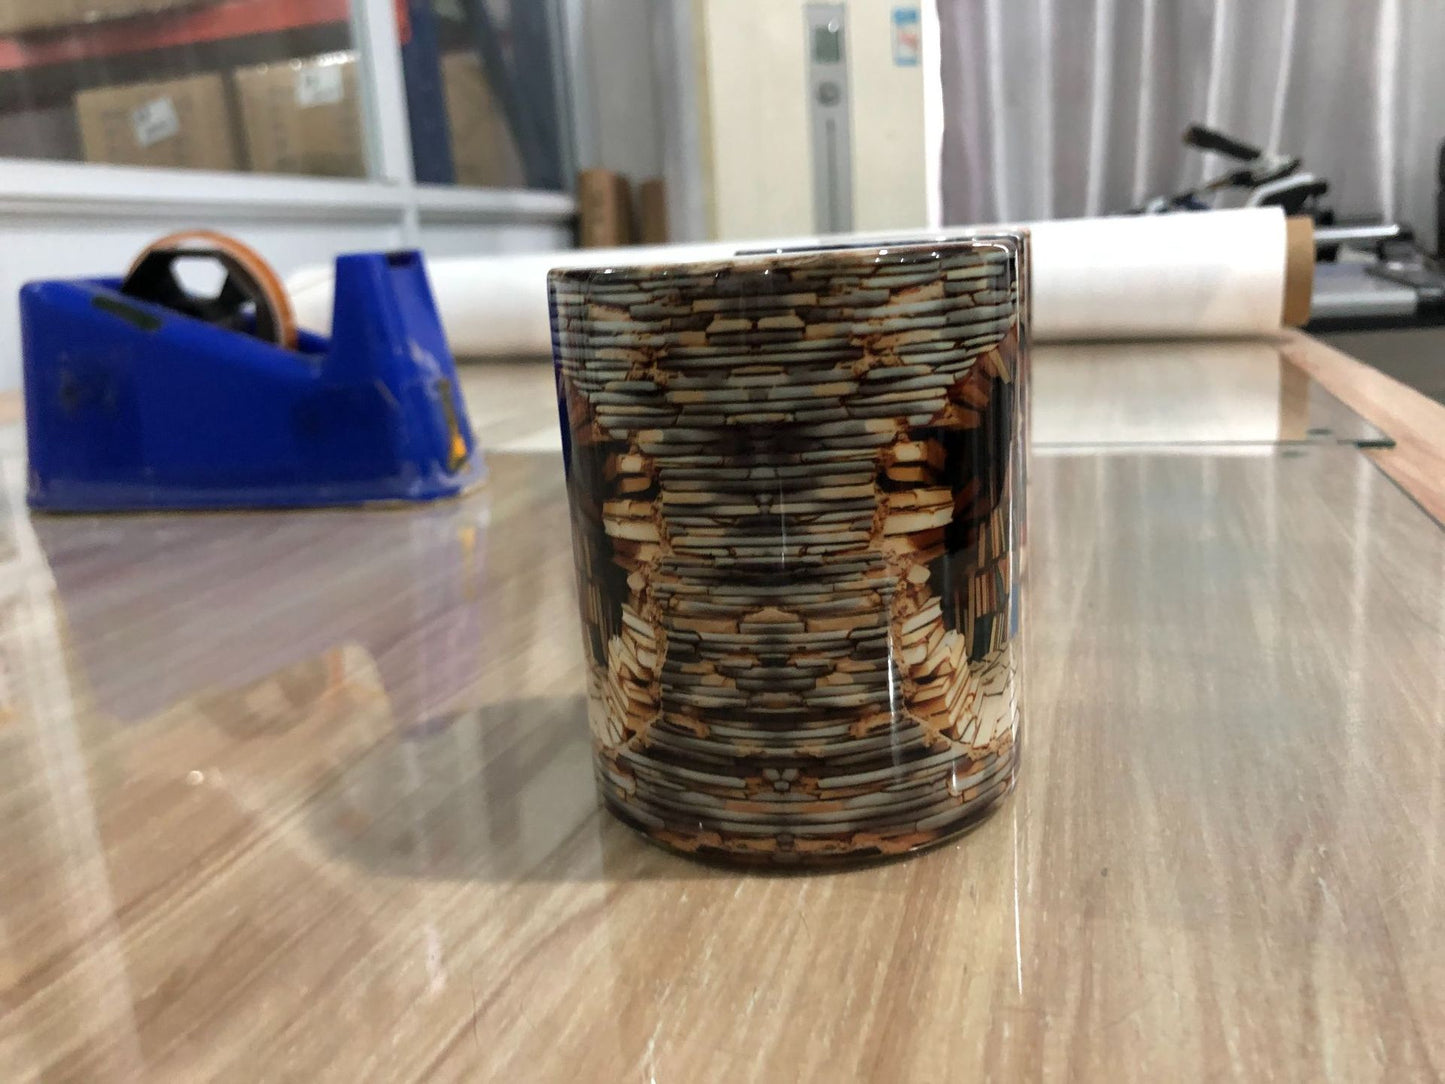 3D Bookshelf Mug Creative Ceramic Water Cup With Handle A Library Shelf Space Book Lovers Coffee Mug Birthday Christmas Gift